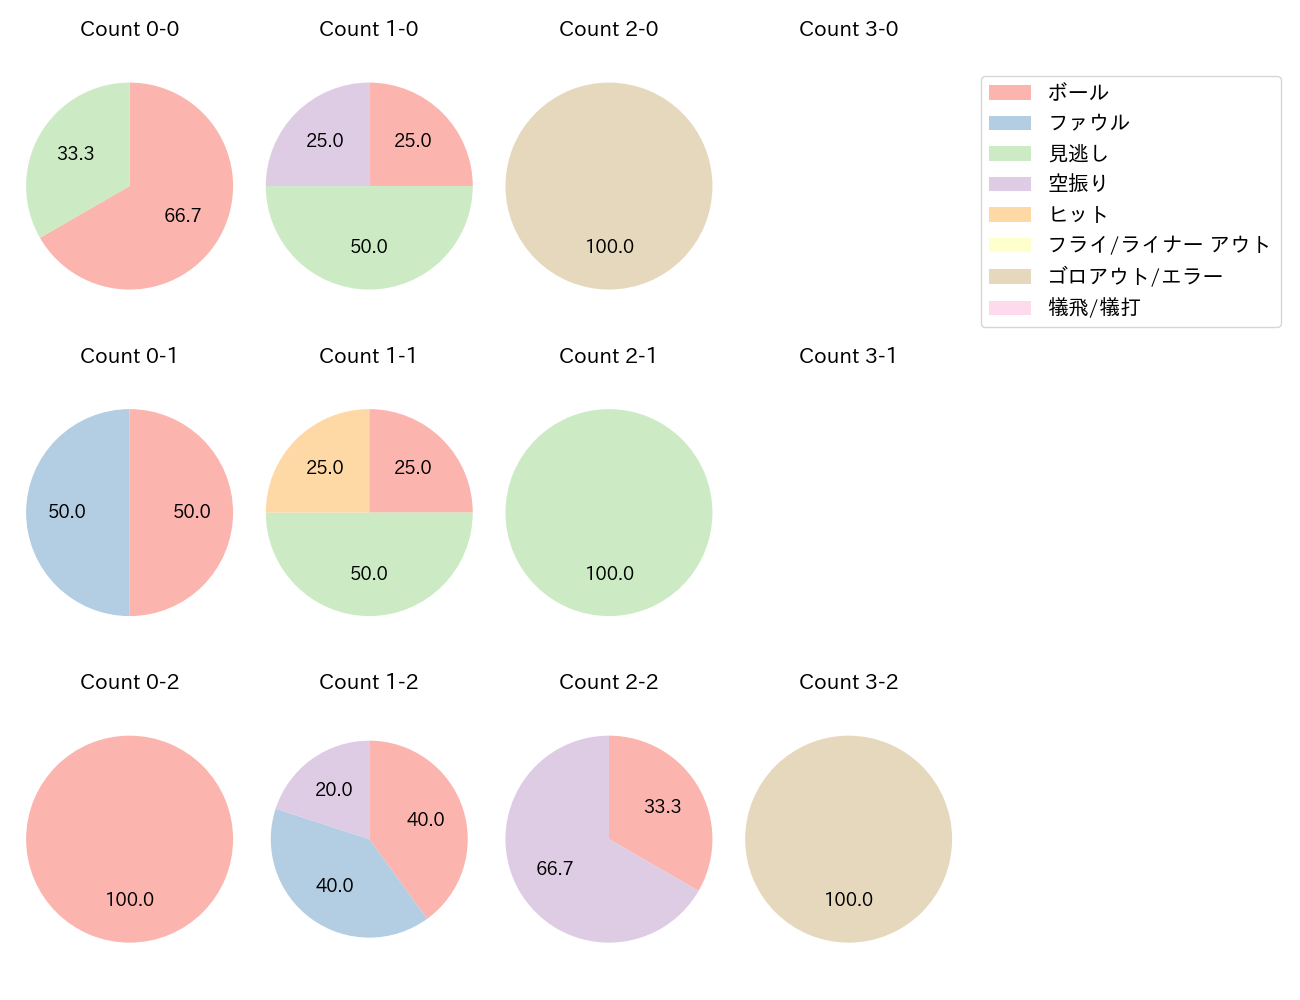 正木 智也の球数分布(2022年7月)